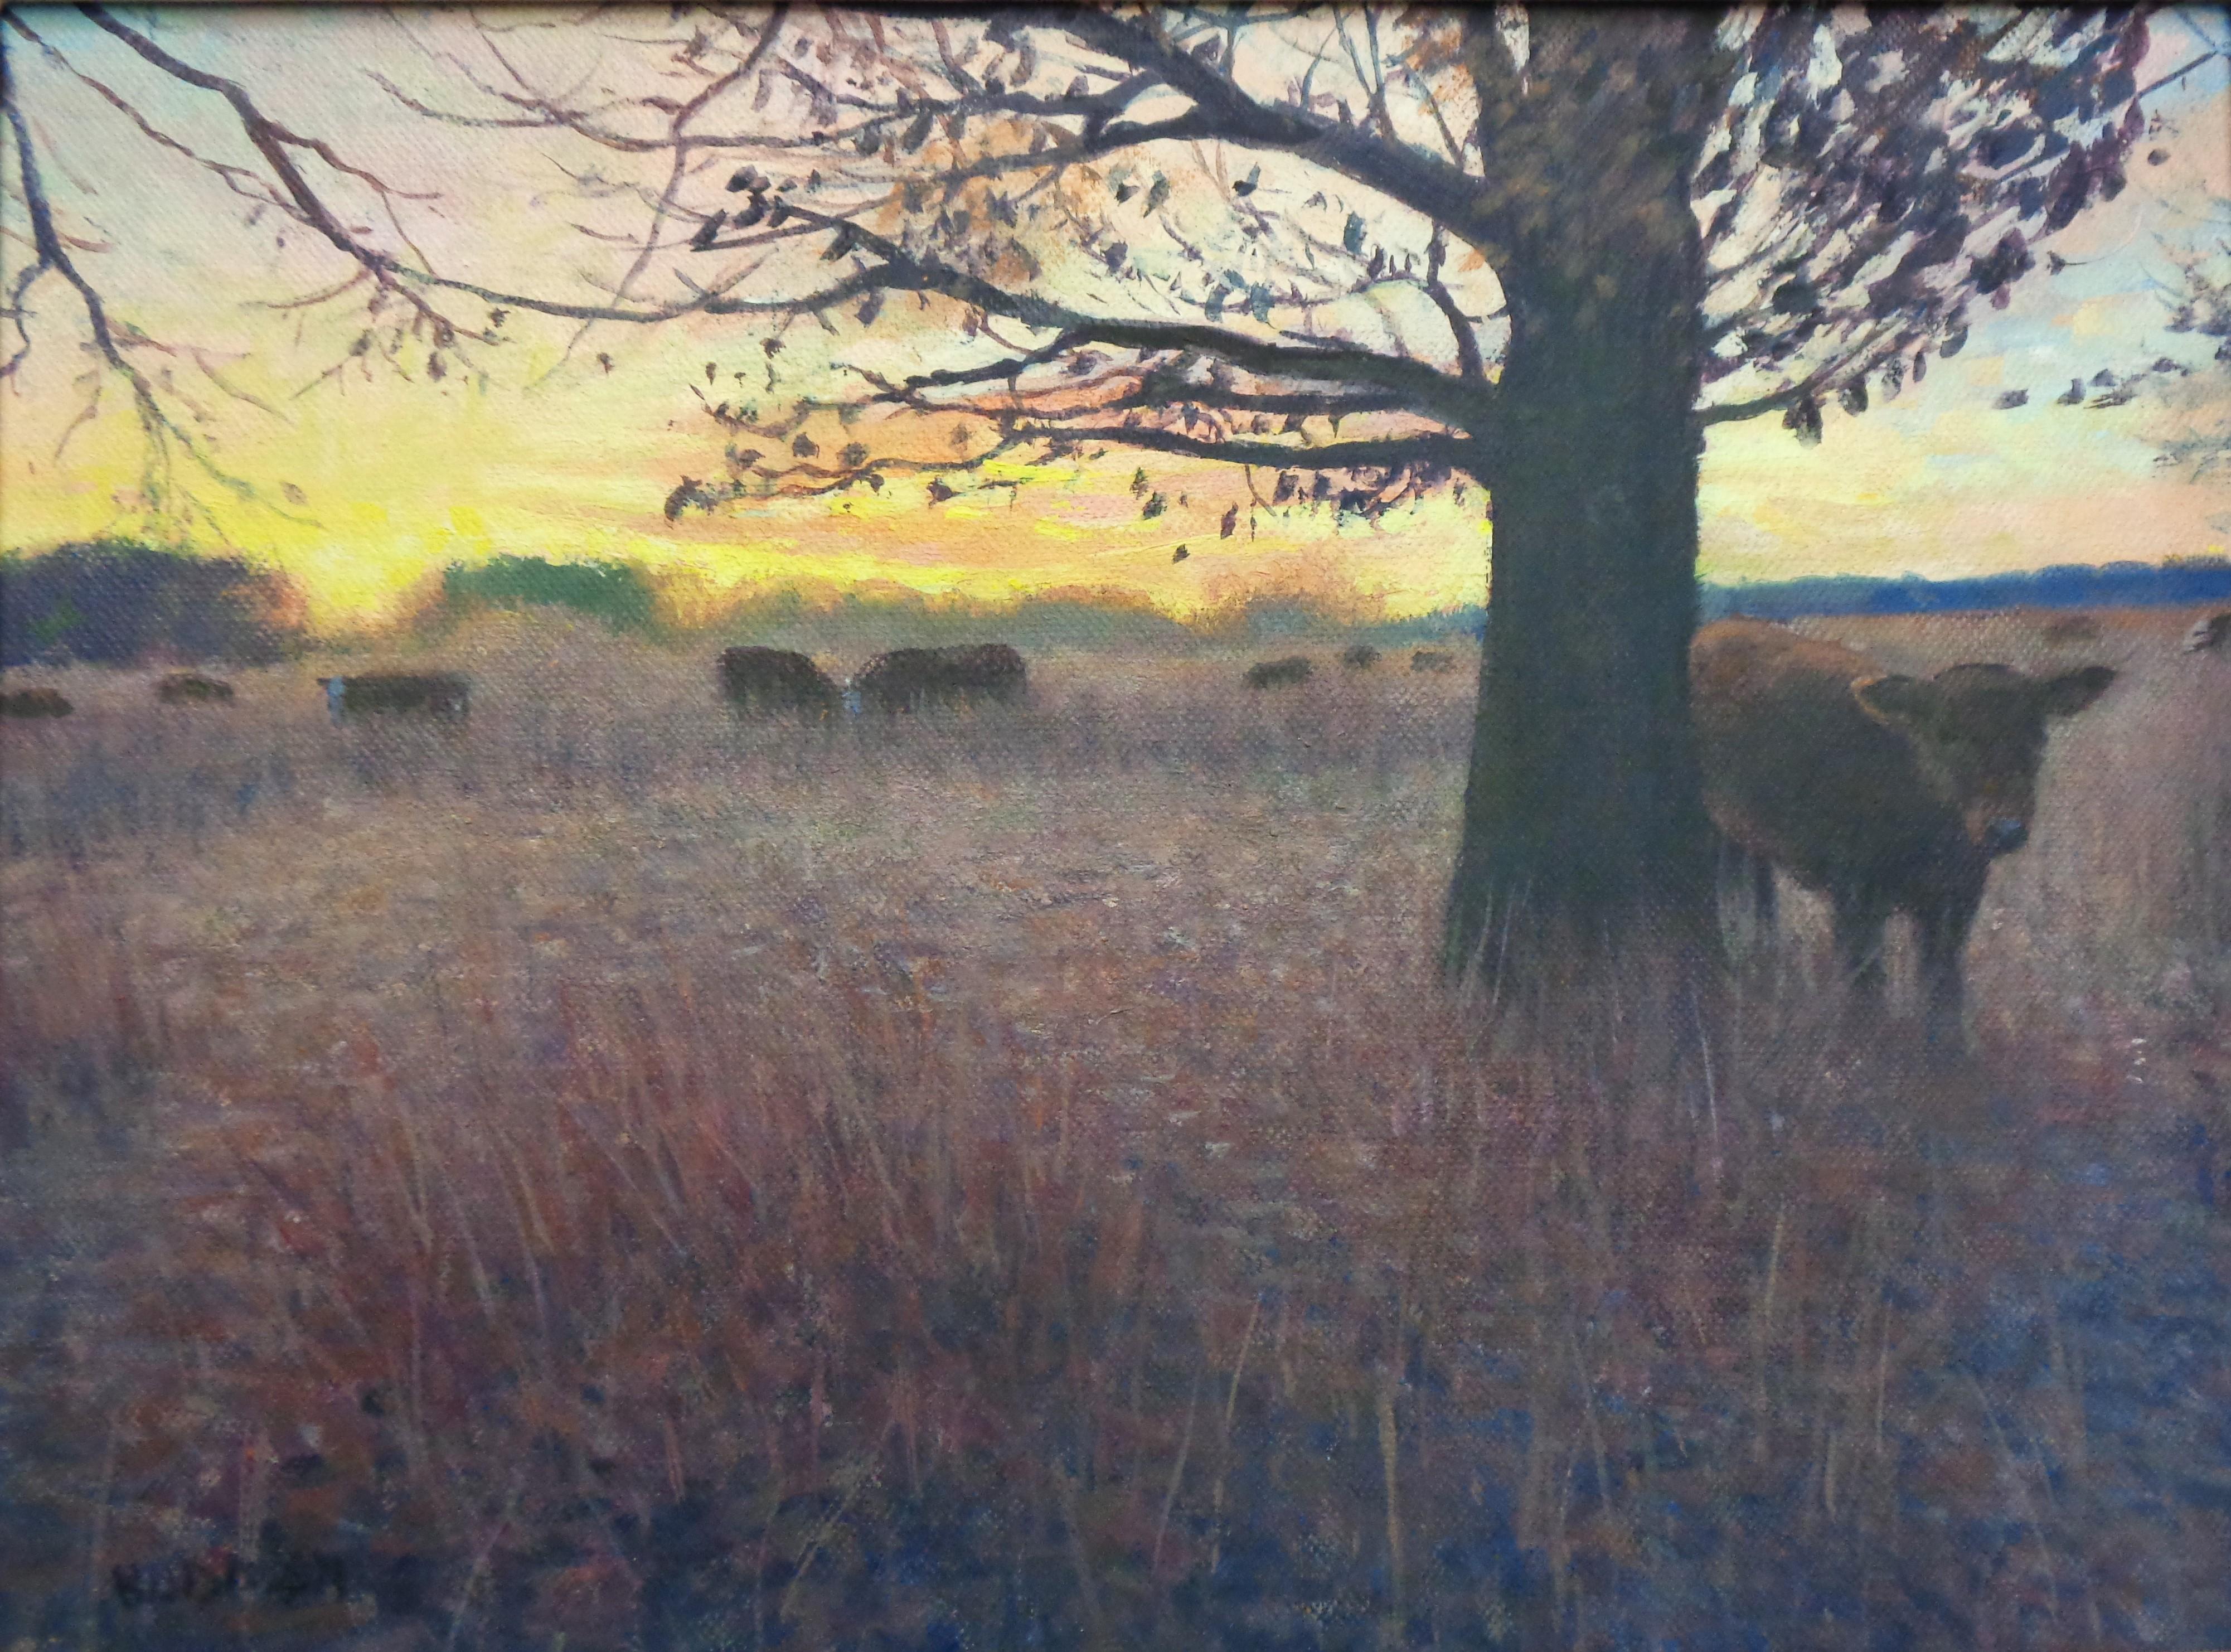  Impressionistic Sunrise Landscape Painting Michael Budden Morning Pasture Cows  For Sale 1